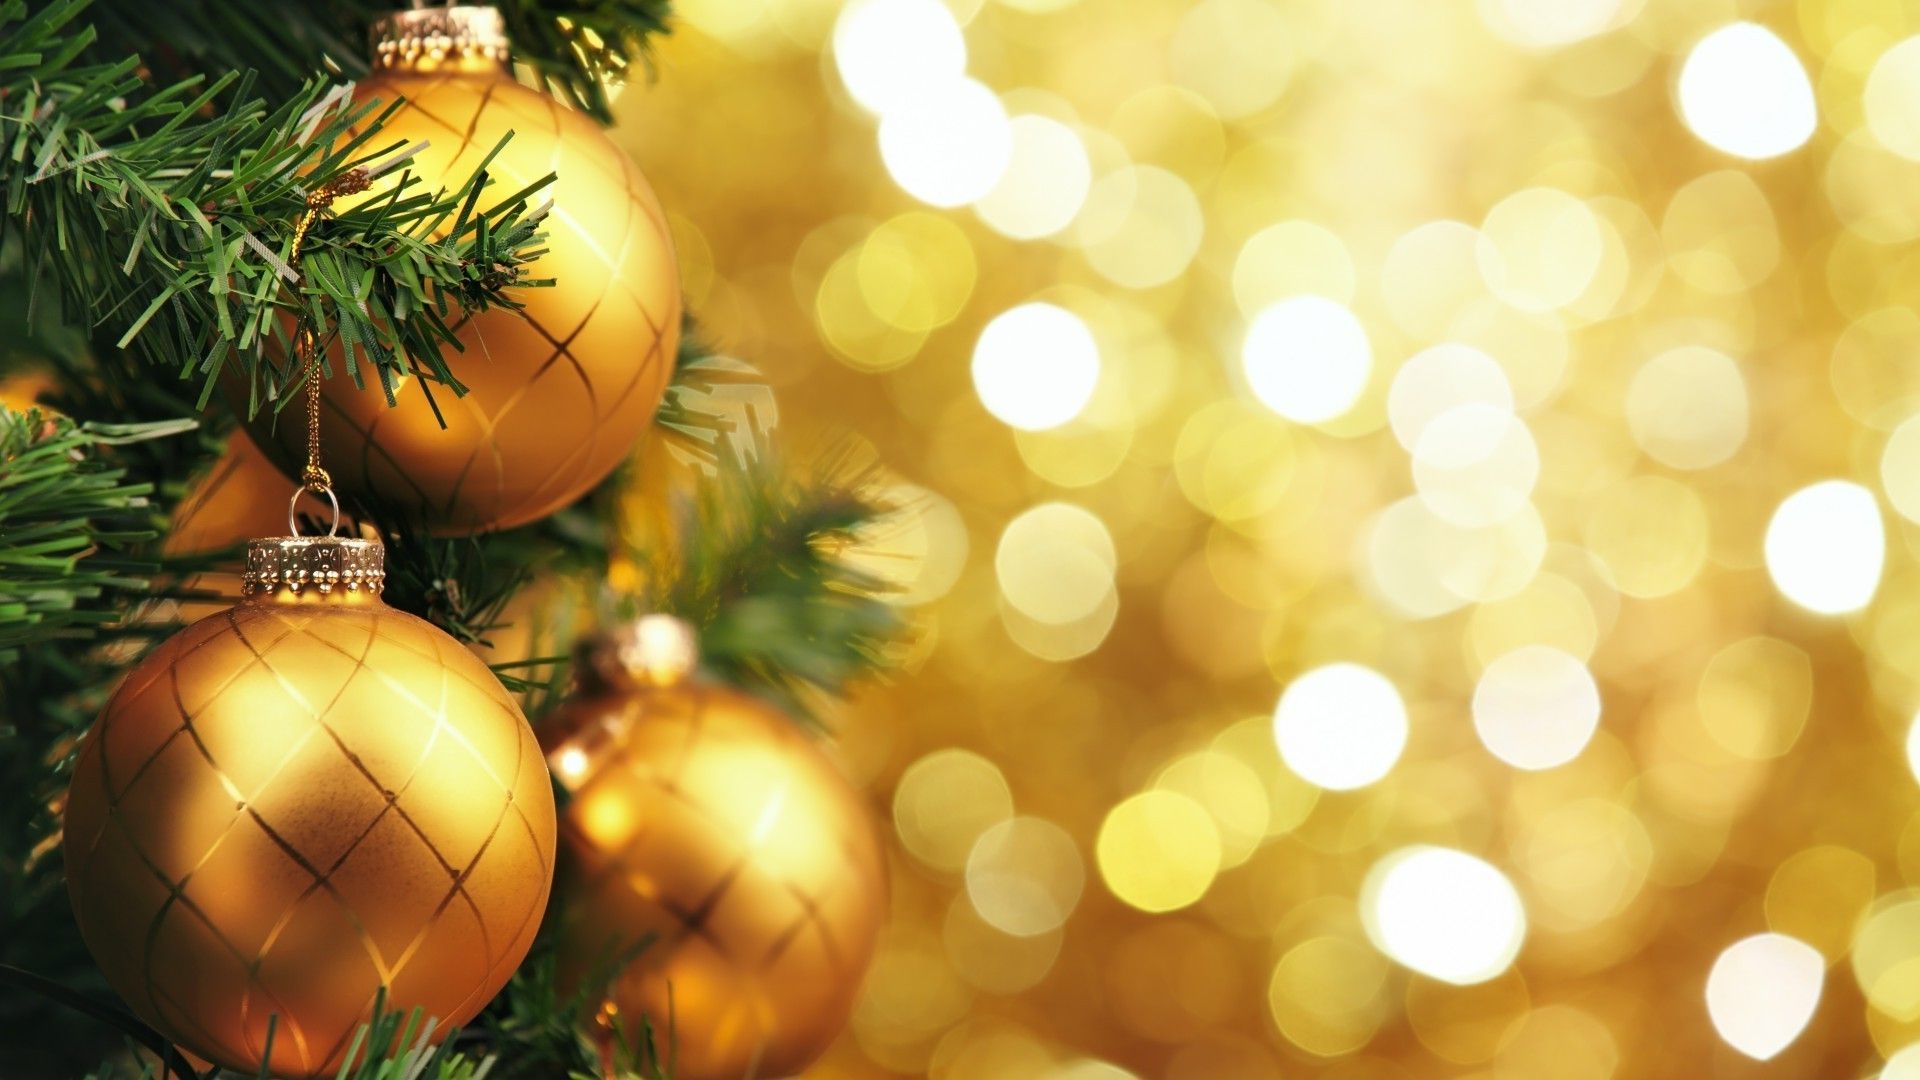 Golden balls on the Christmas tree